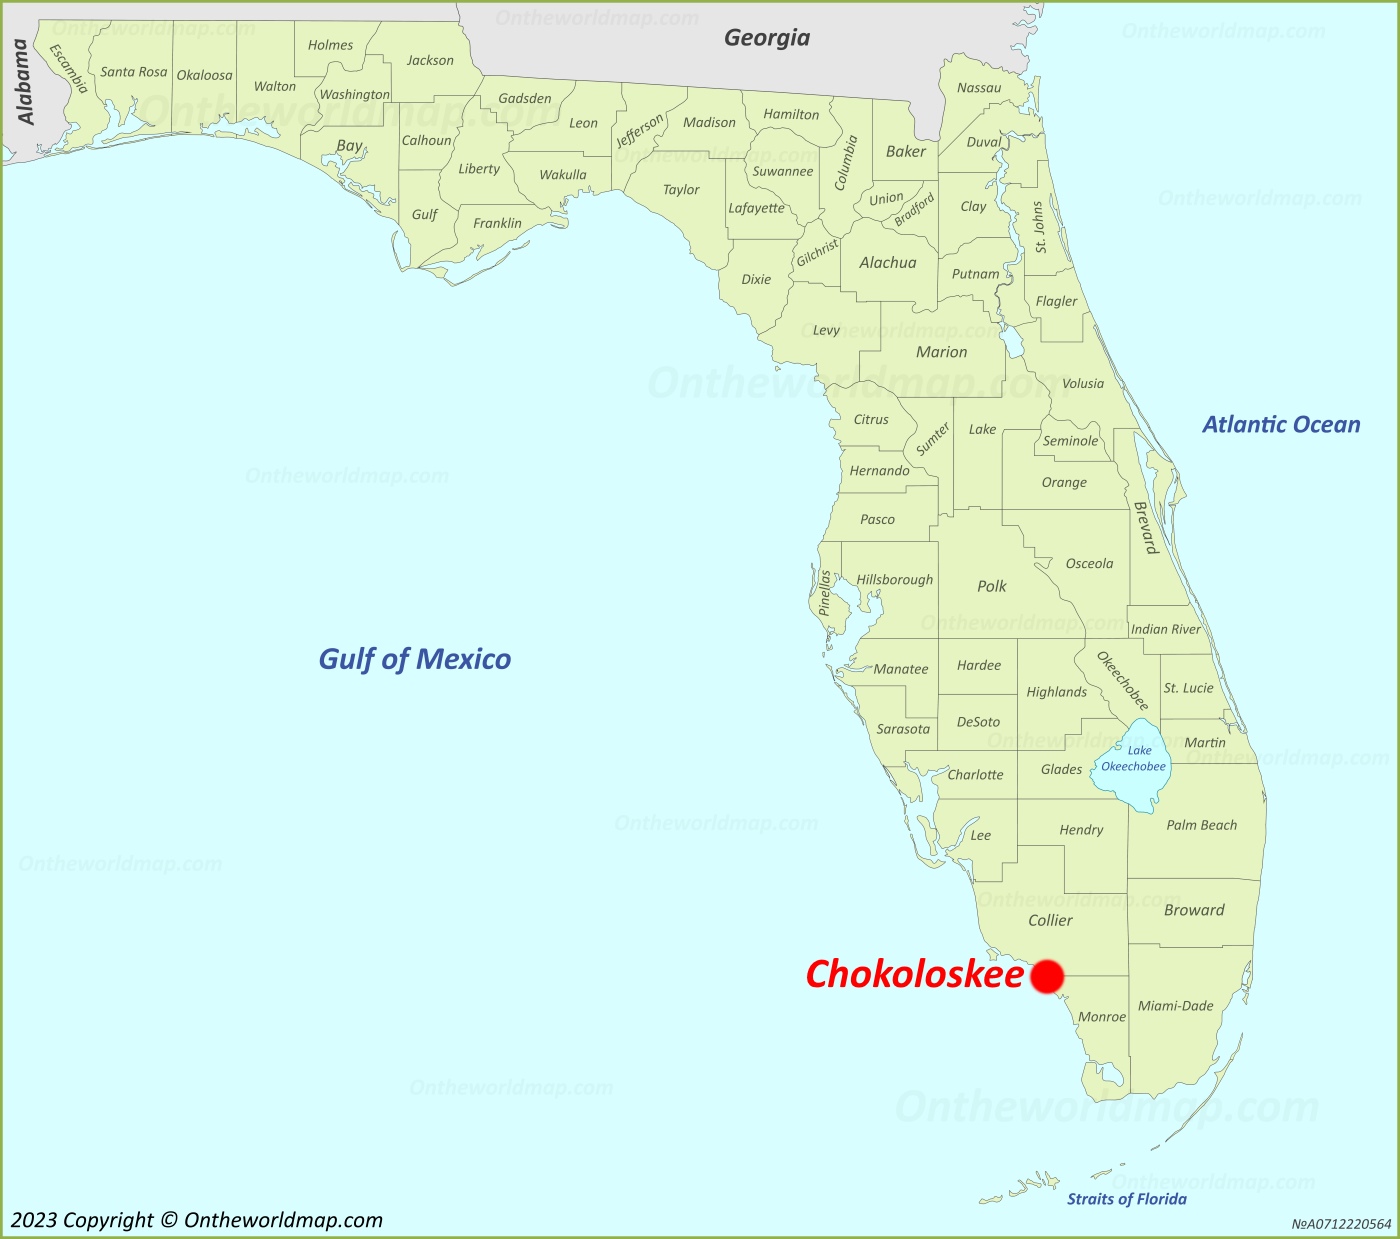 Chokoloskee Location On The Florida Map